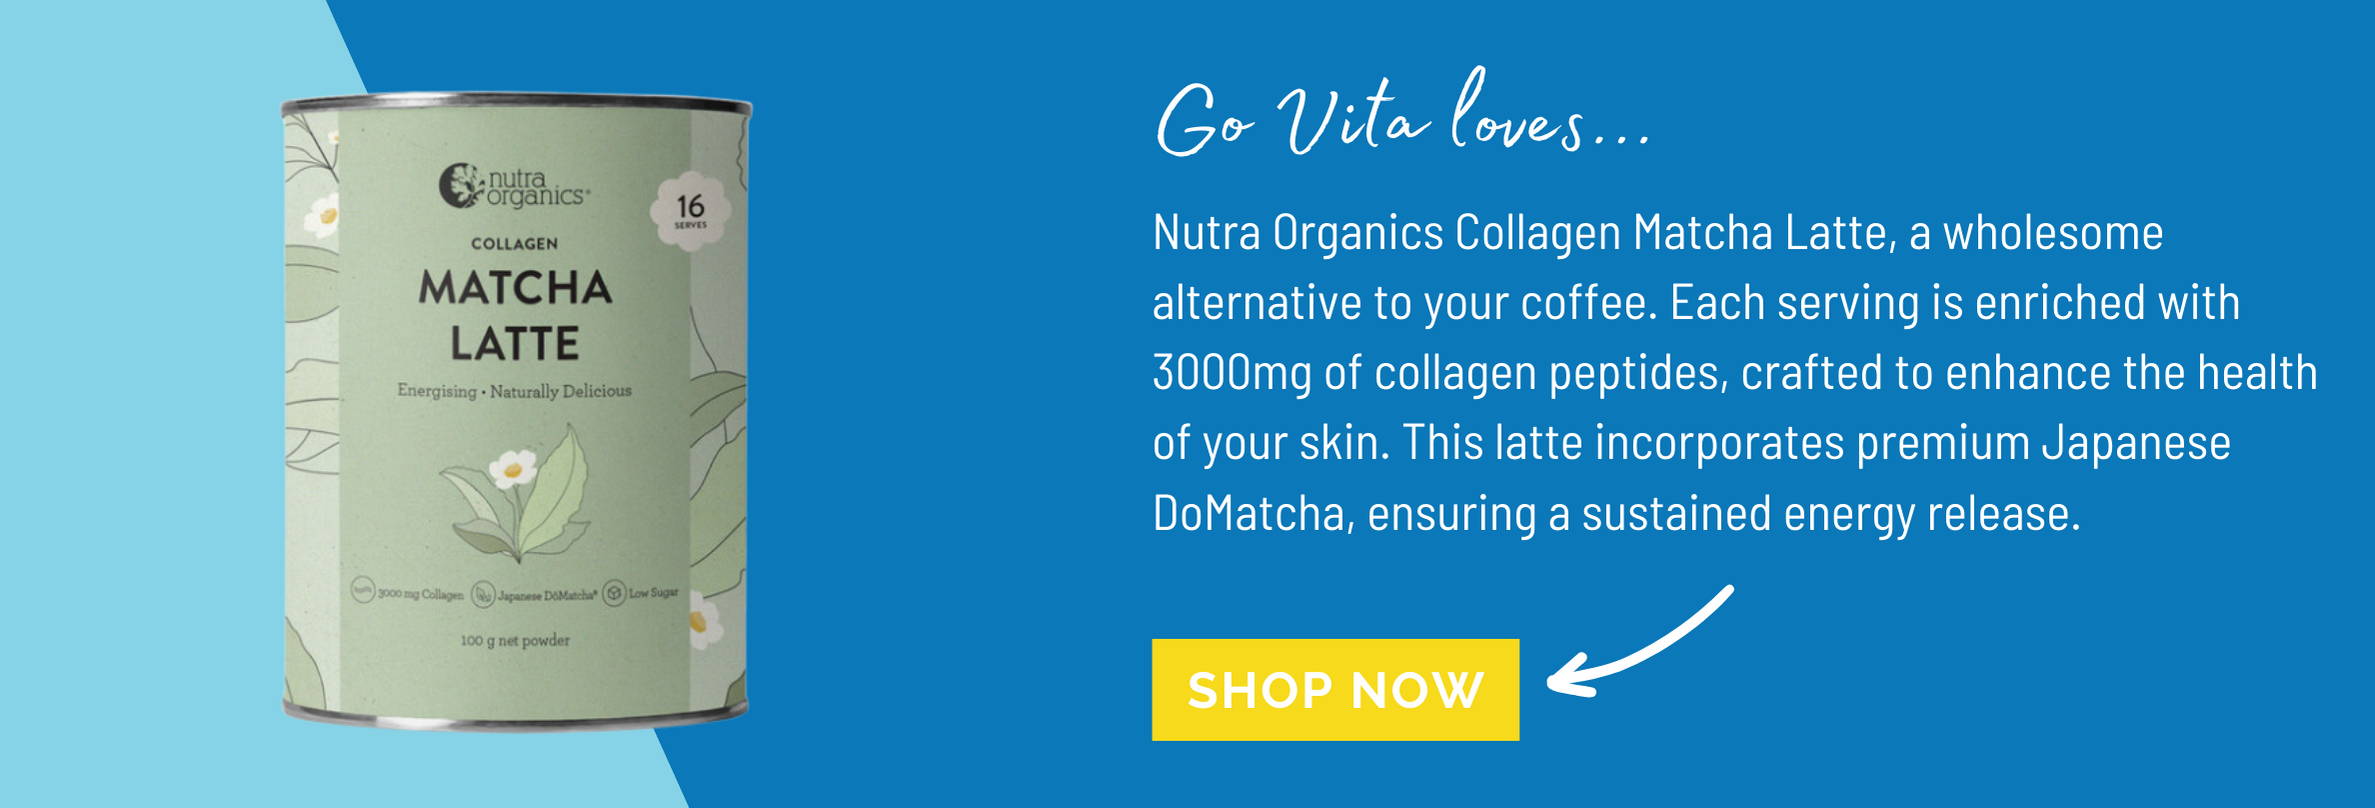 Collagen Matcha at Go 